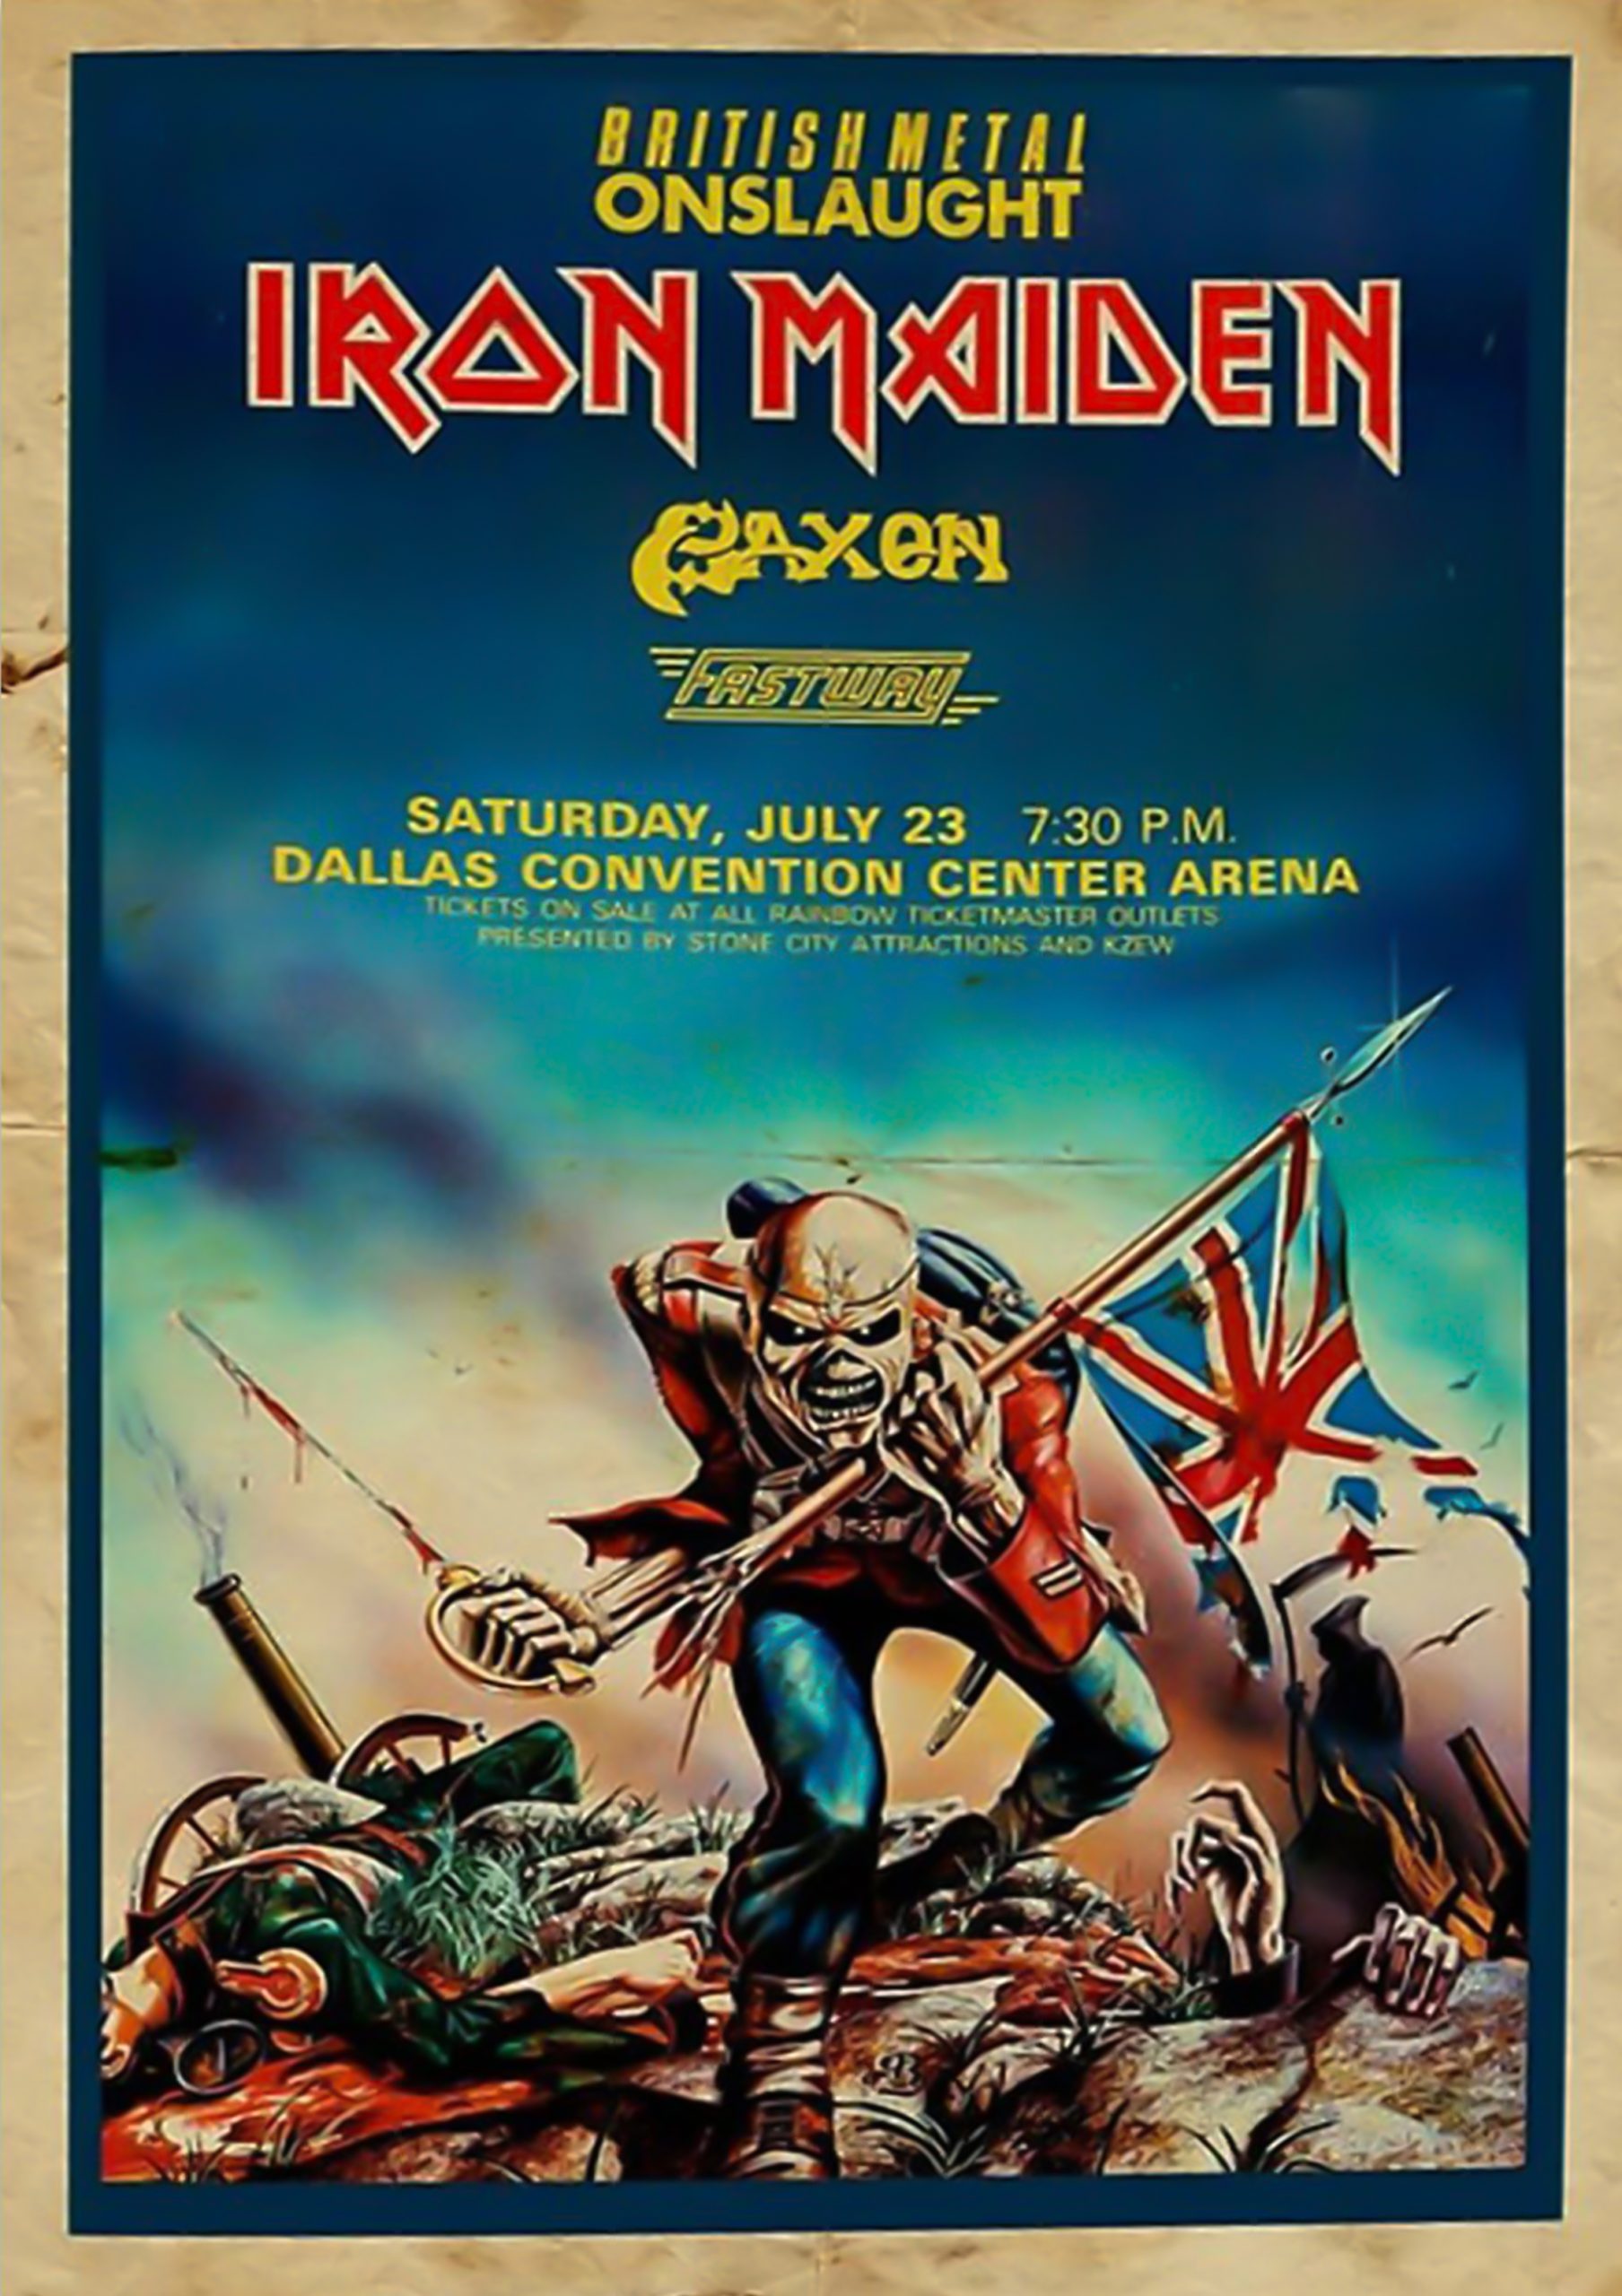 Britishmetal onslaught iron maiden poster